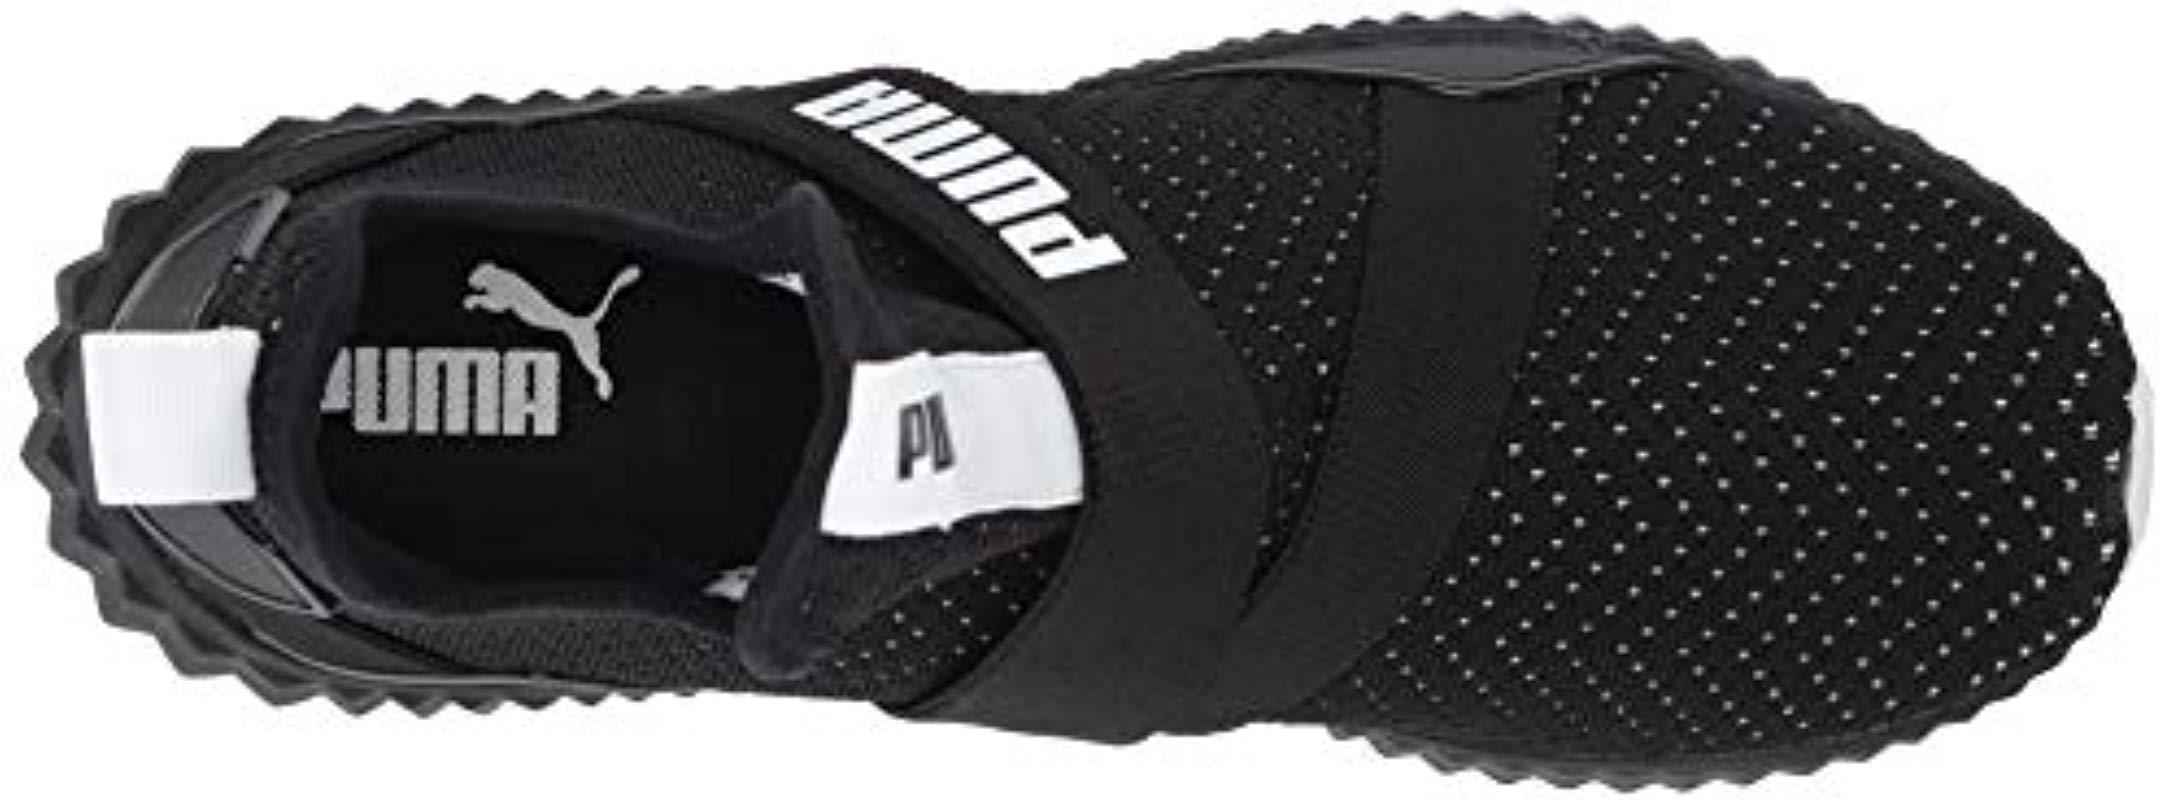 PUMA Defy Mid Core Shoes in Black/White (Black) | Lyst